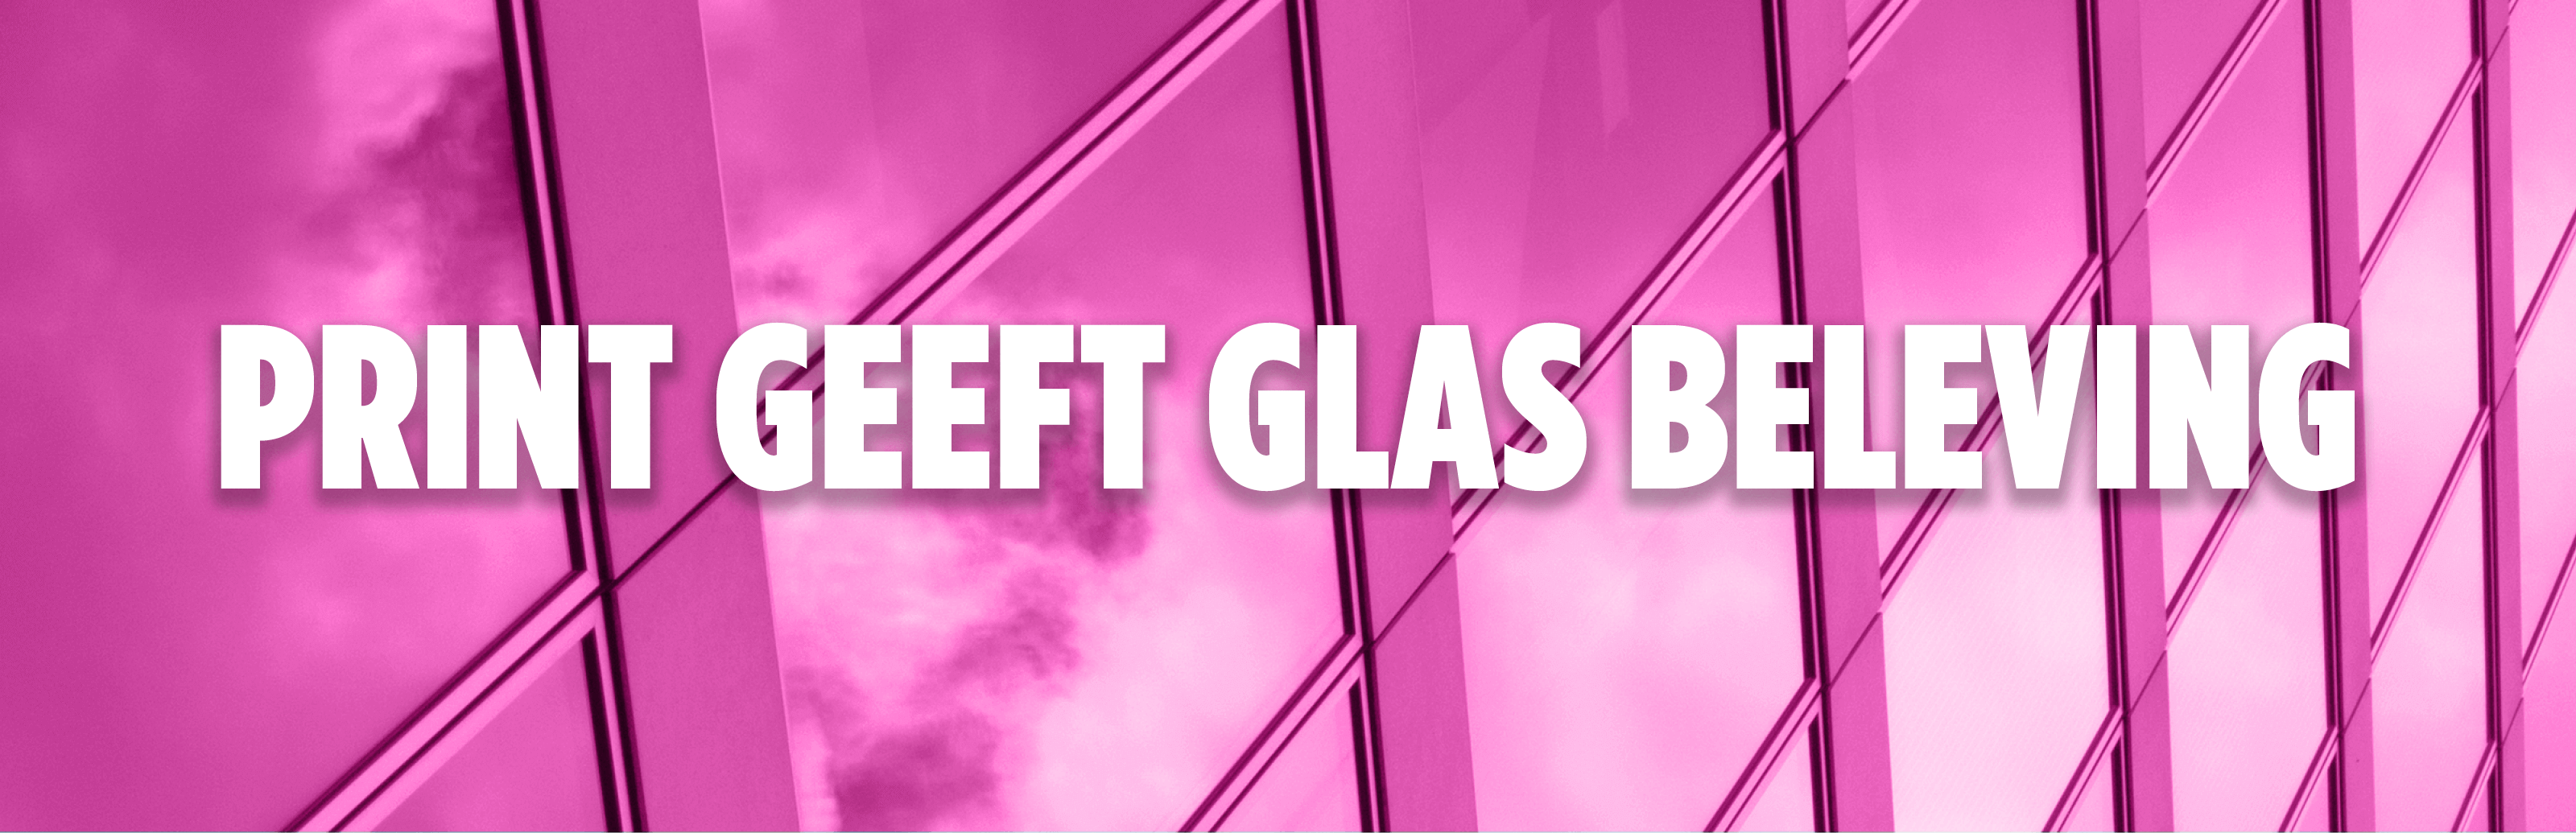 Print Geeft Glas Beleving